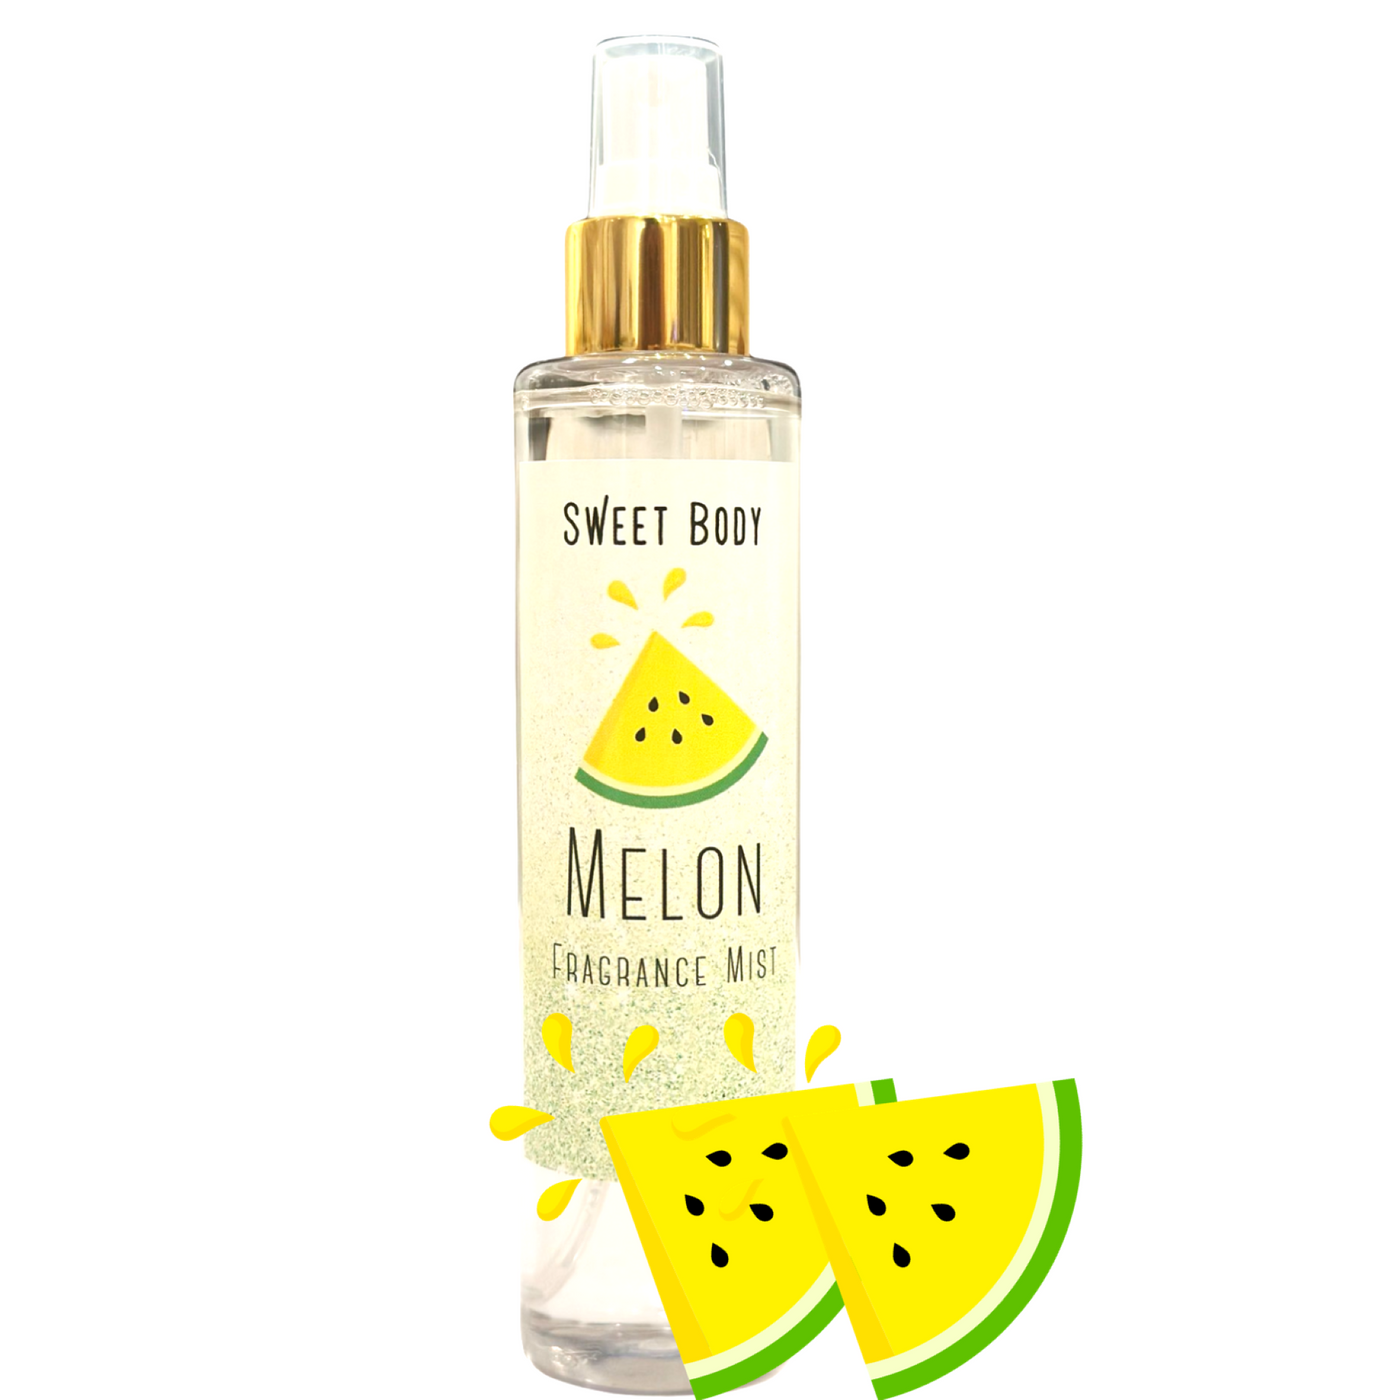 MELON Soft & Fresh Body Mist, Fine Body Perfume Misting Spray, Sensual light scent Fragrance, Hair, Body Spritz Sweet Body 6oz.